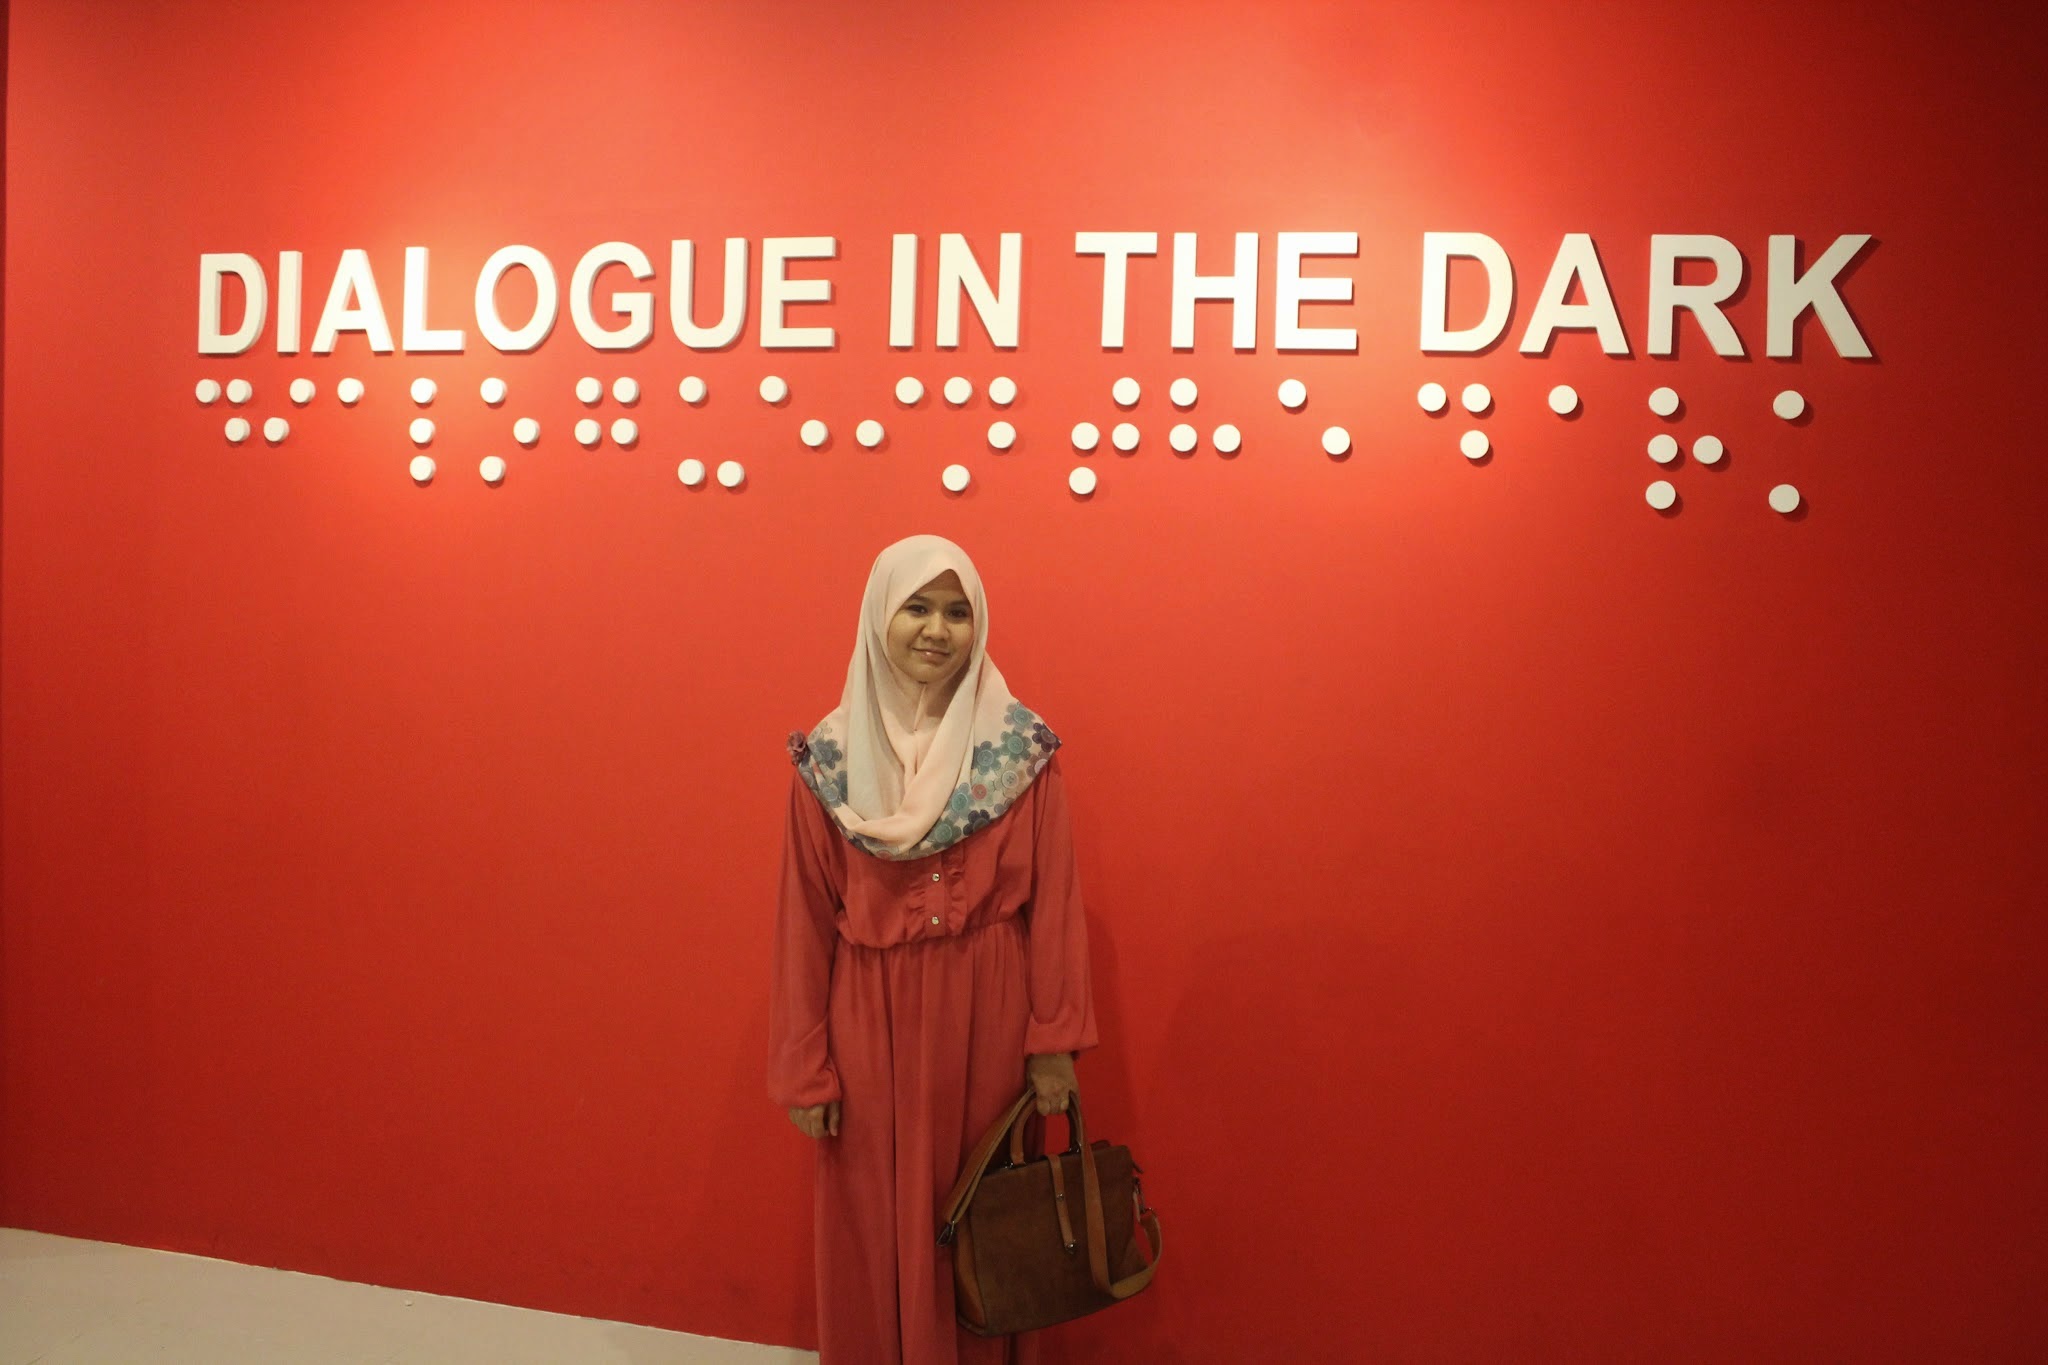 Glaucoma, Nuffnang, Dialogue in The Dark (DiD) Malaysia, Stevens Chan Kum Fai, dinner in the dark, experience dialogue in the dark, nuffnang event,